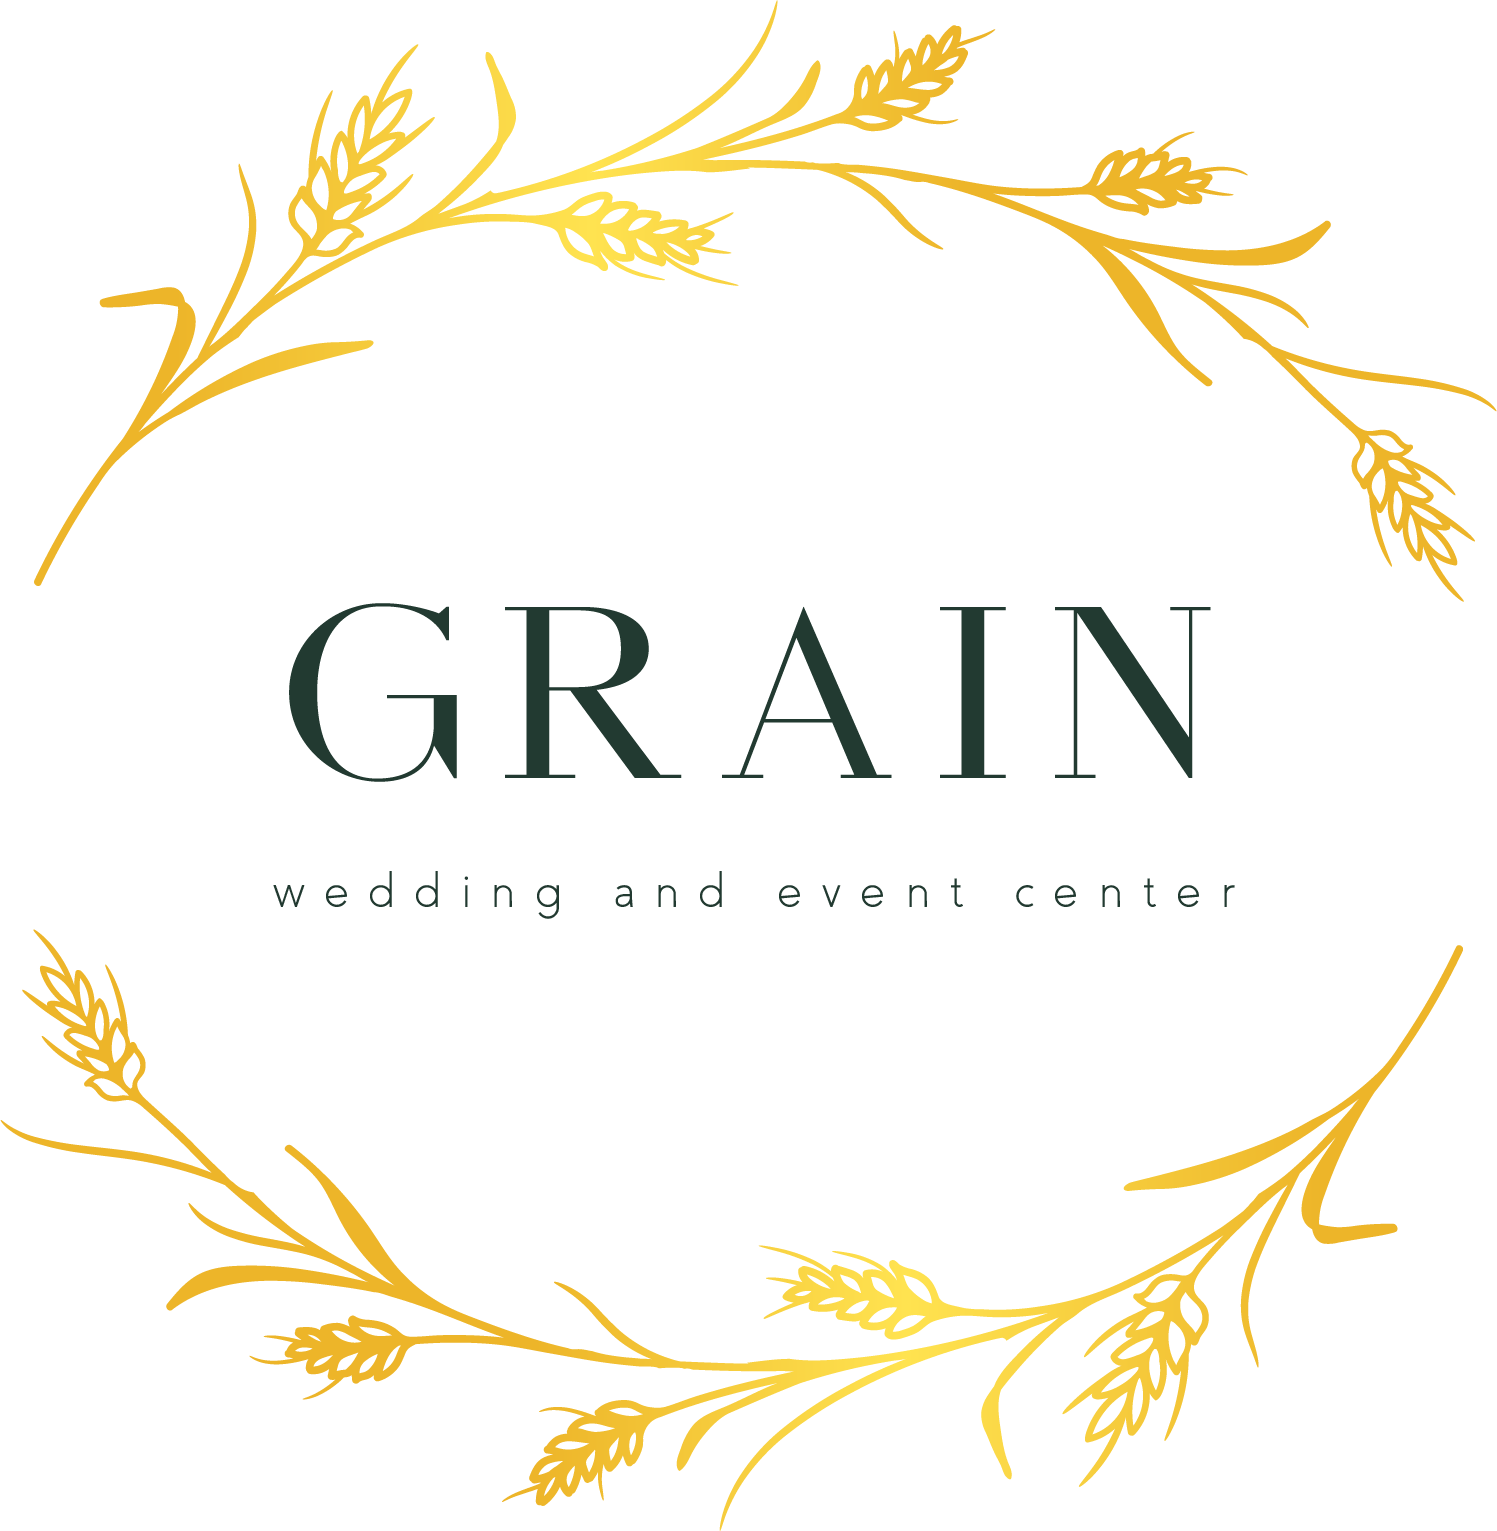 Grain Wedding and Event Center